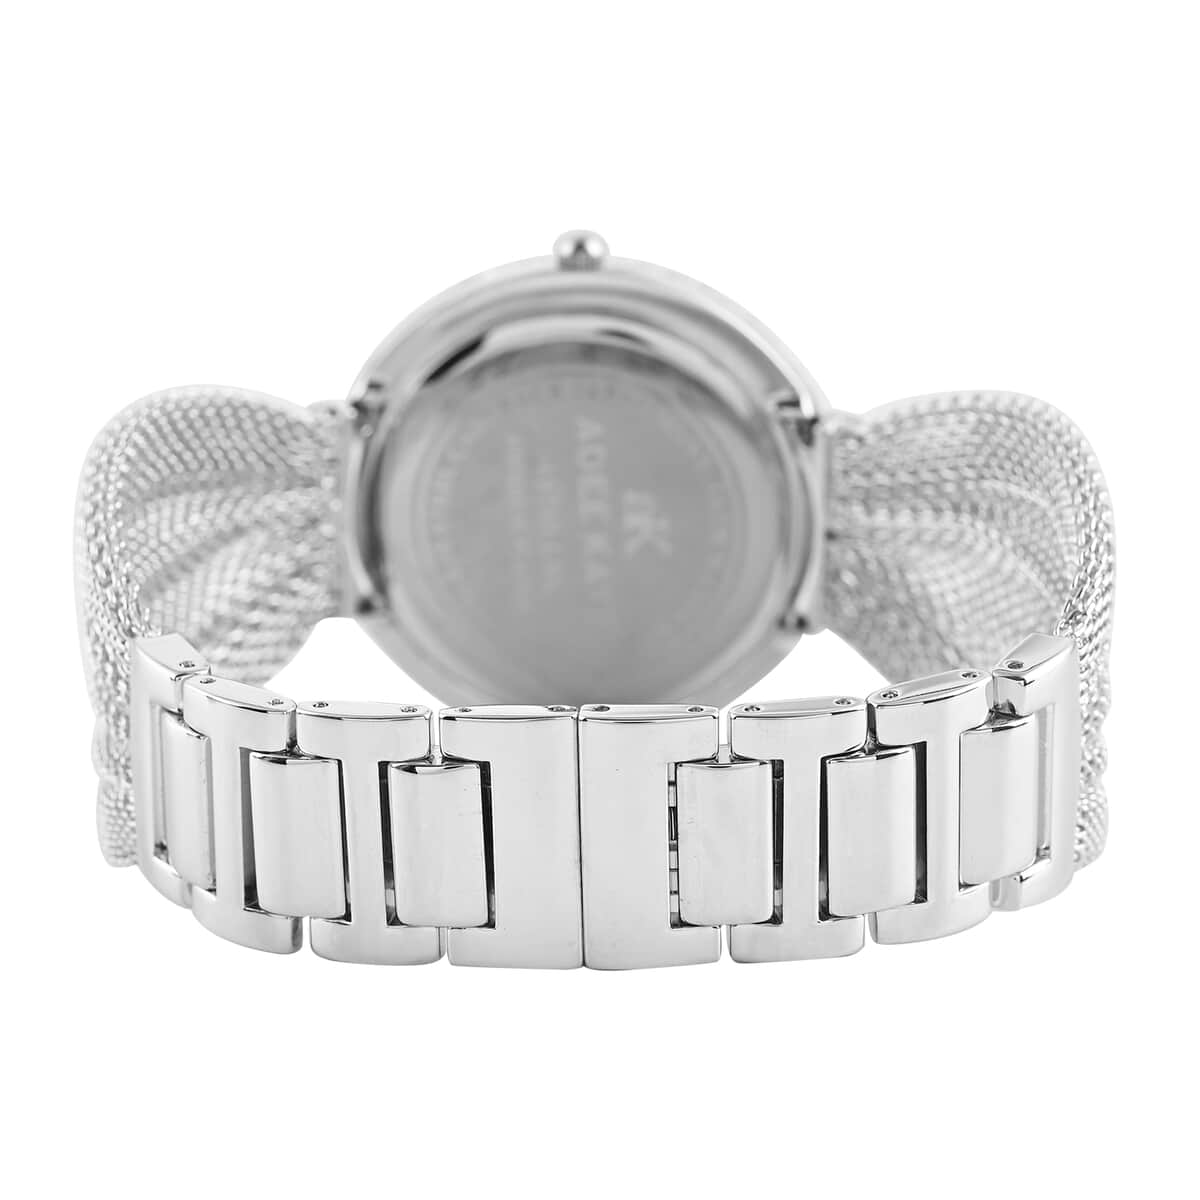 ADEE KAYE Austrian Crystal Japan Quartz Movement Black Dial Watch in Silvertone Strap (40.9 mm) | Women's Designer Watch | Analog Luxury Wristwatch image number 3